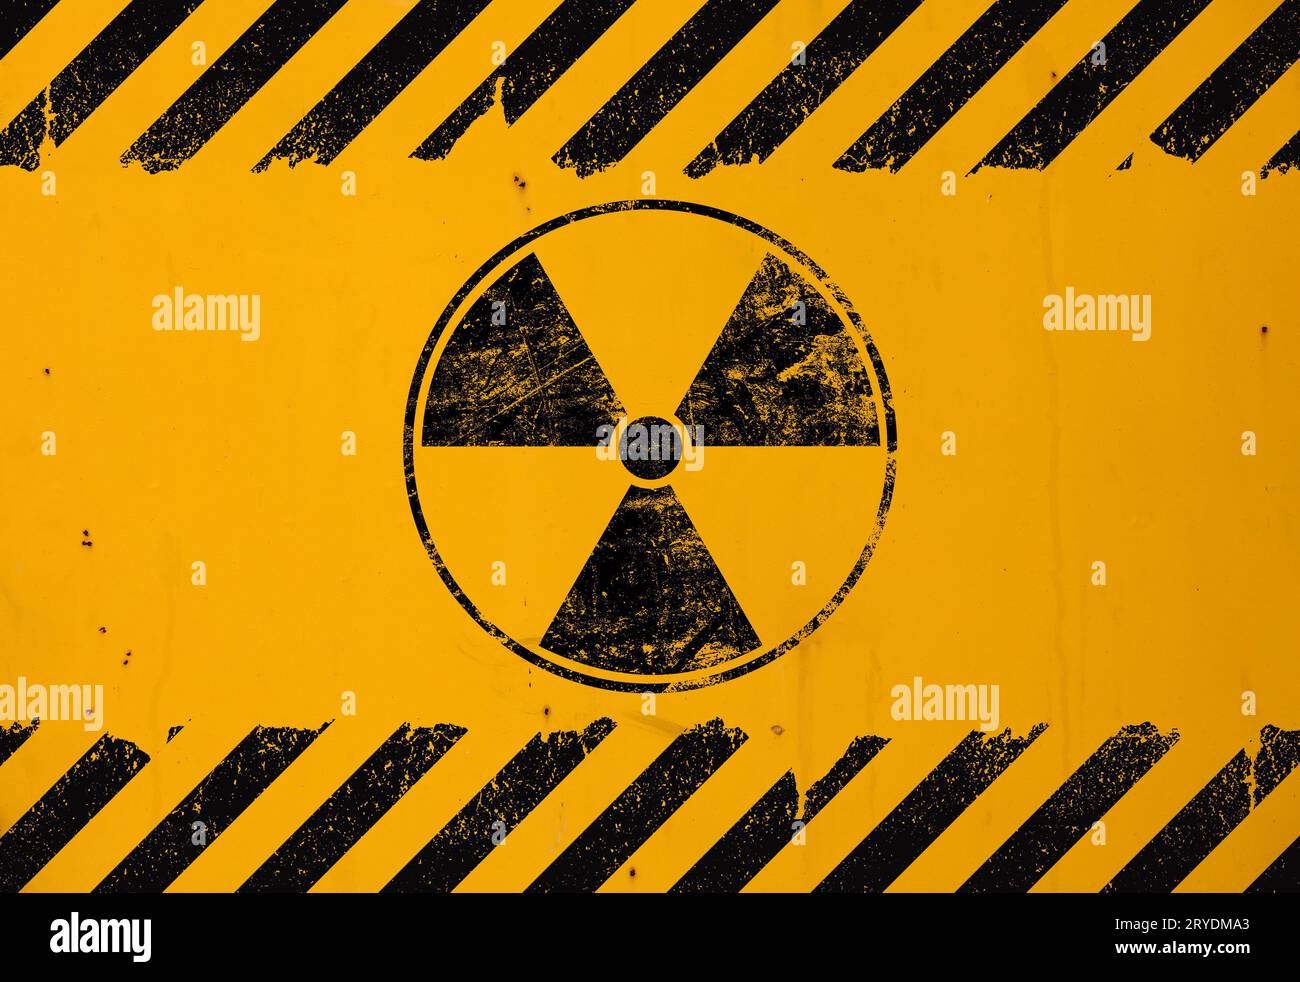 Black radioactive sign over yellow background Stock Photo